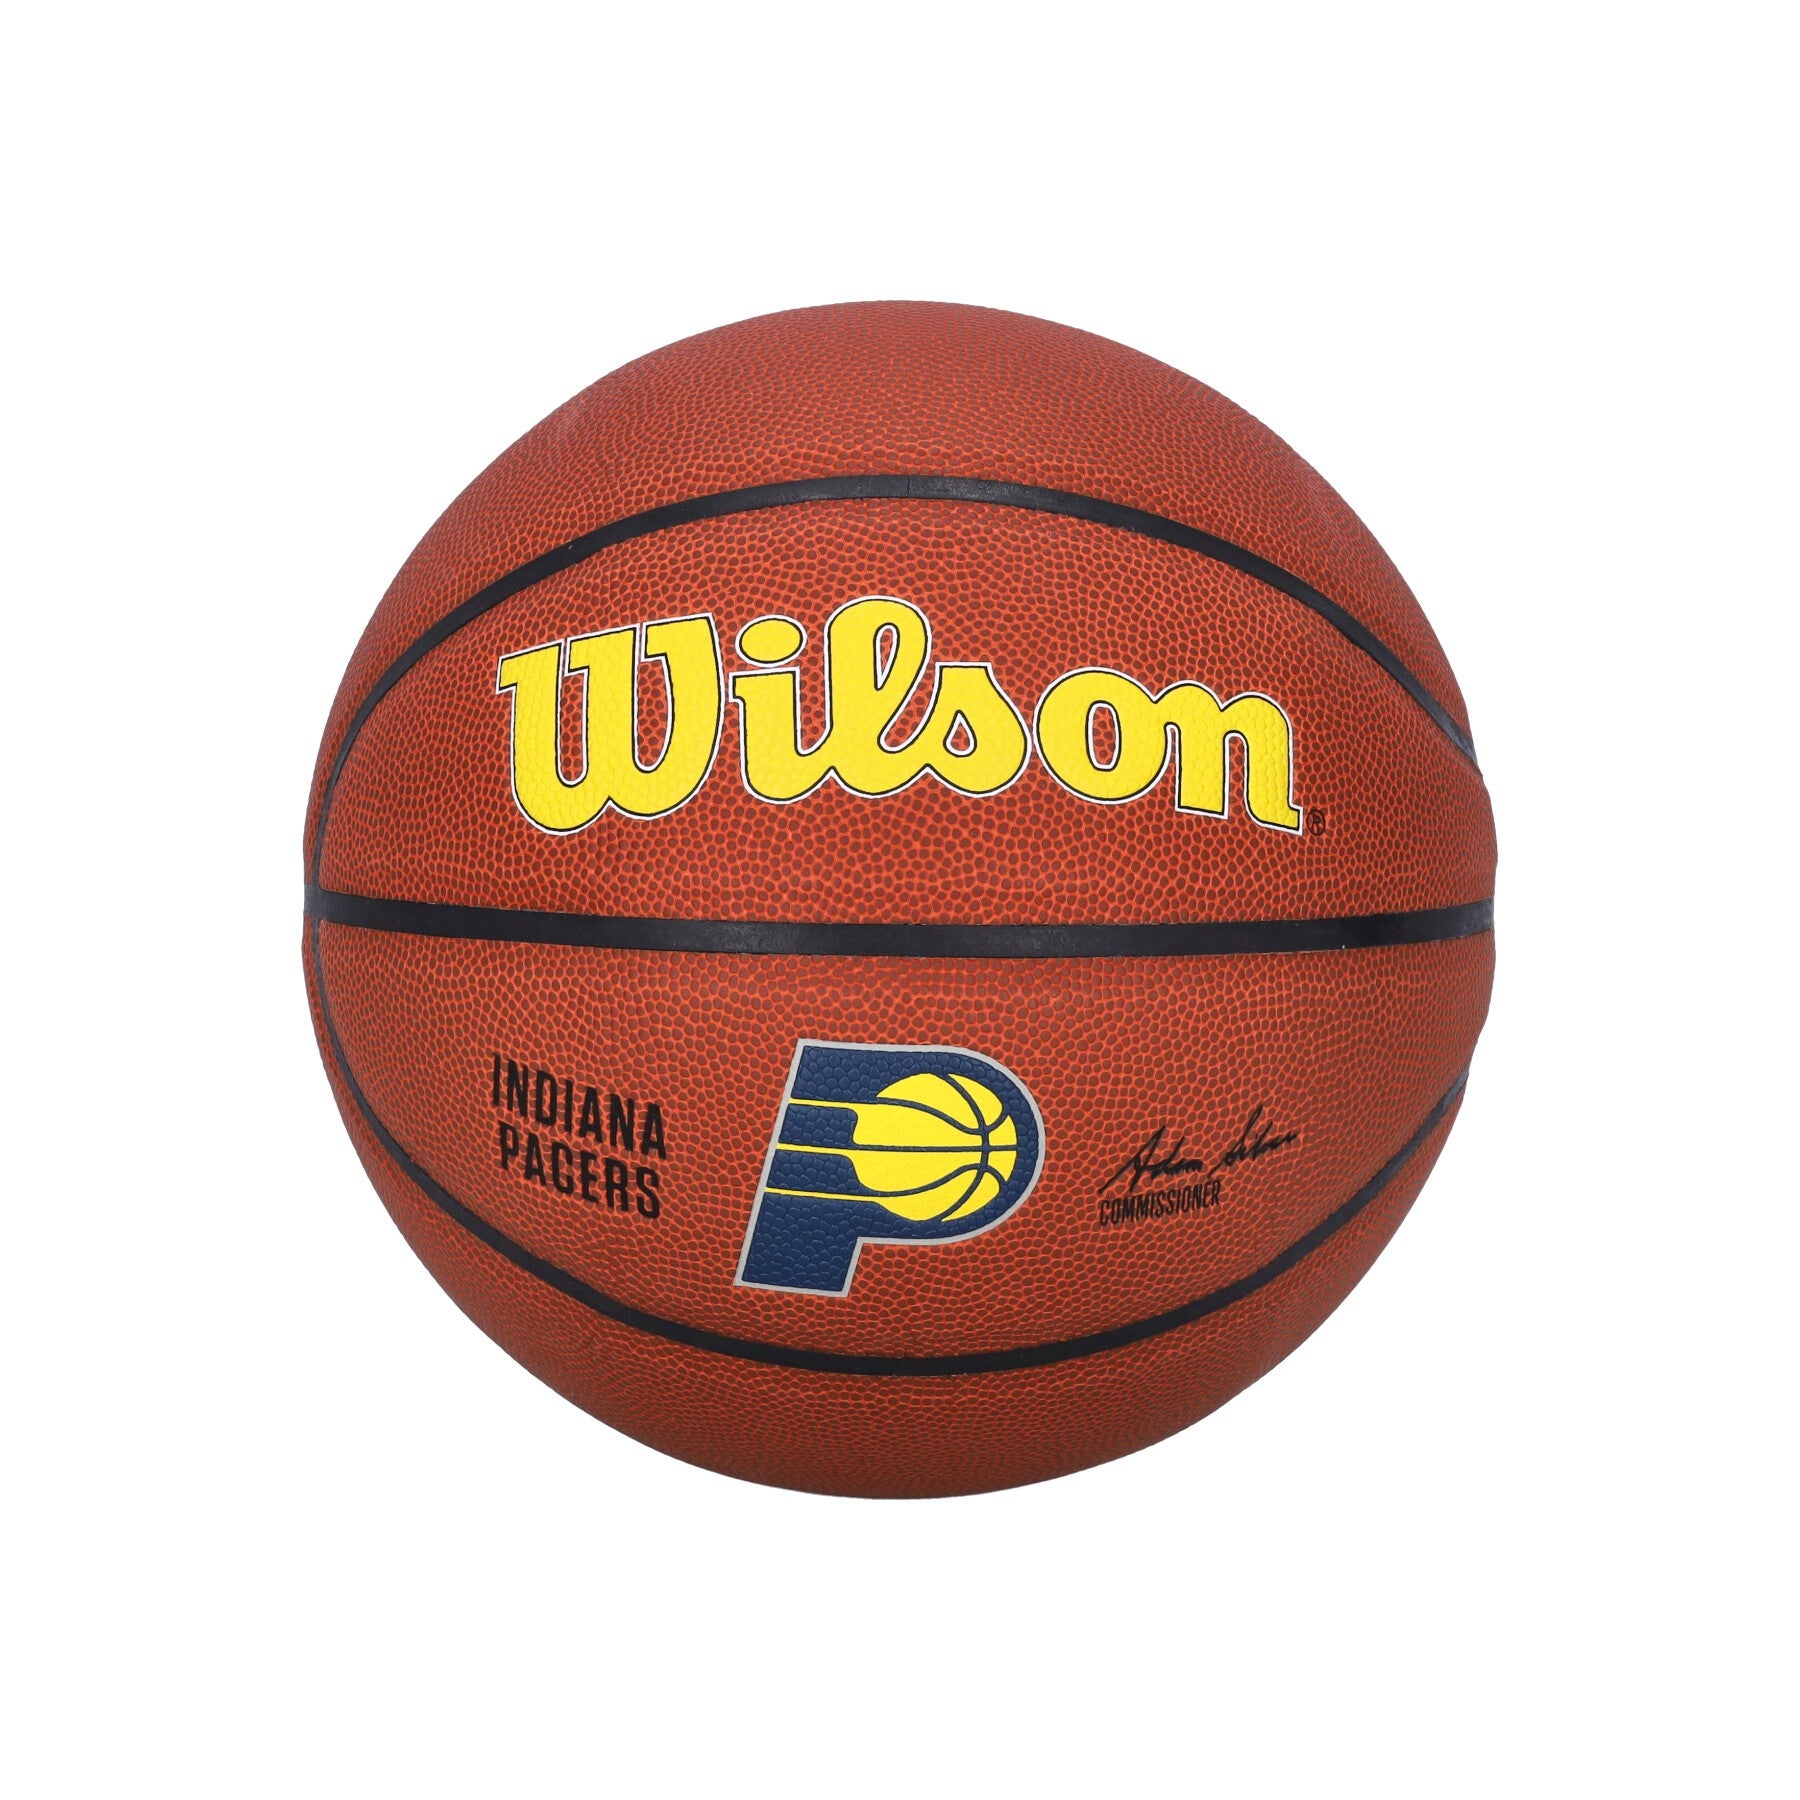 Wilson Team, Pallone Uomo Nba Team Alliance Basketball Size 7 Indpac, Brown/original Team Colors